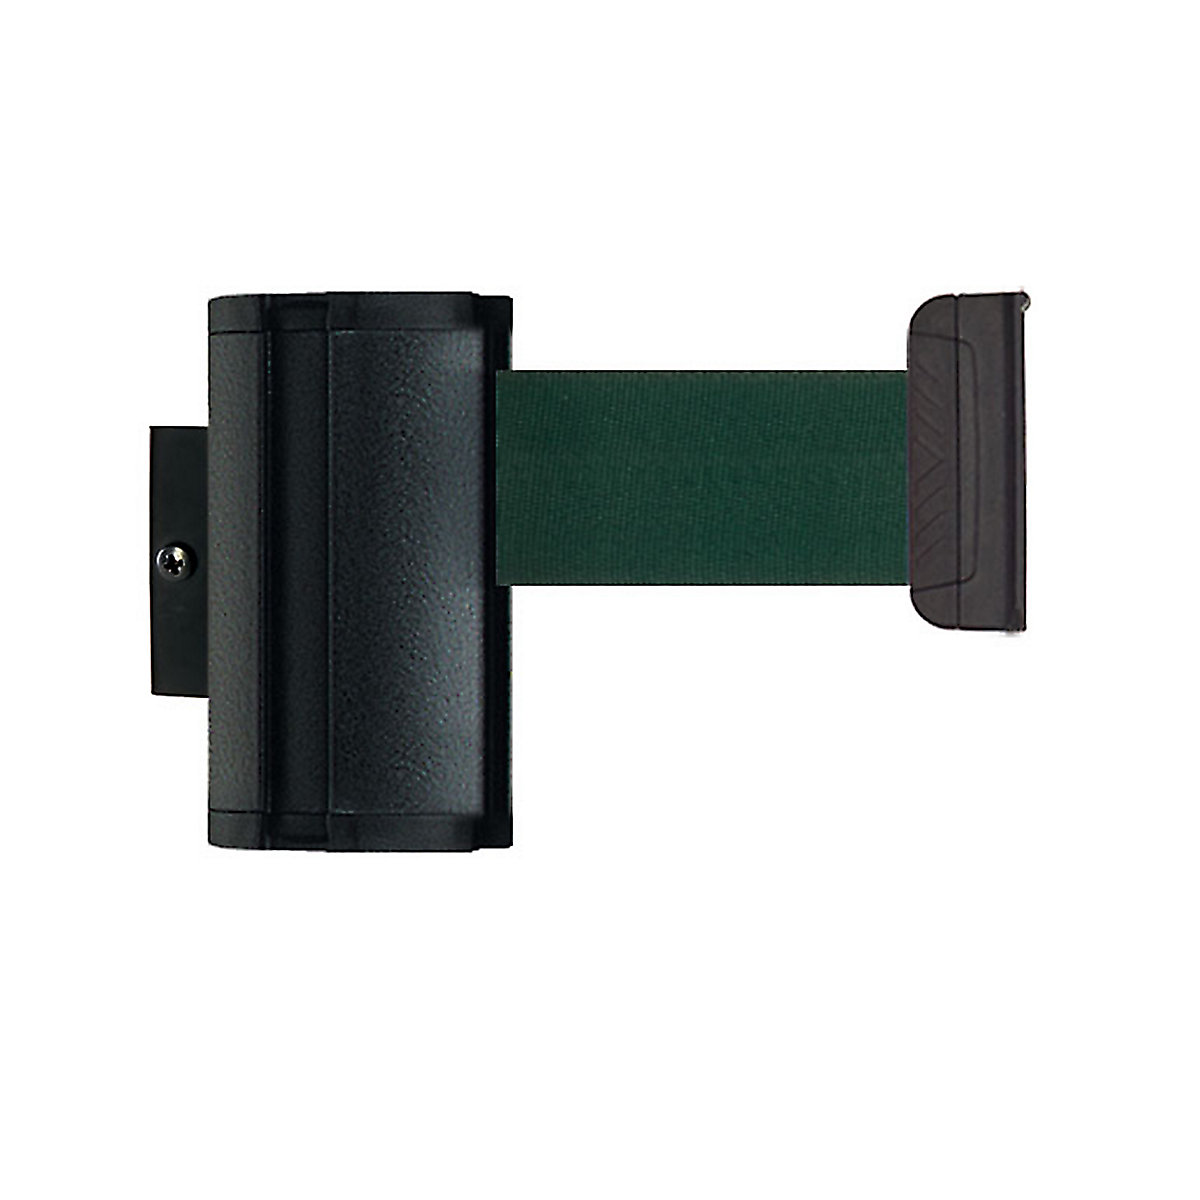 Bandcassette Wall Mount, uittreklengte max. 2300 mm, bandkleur groen